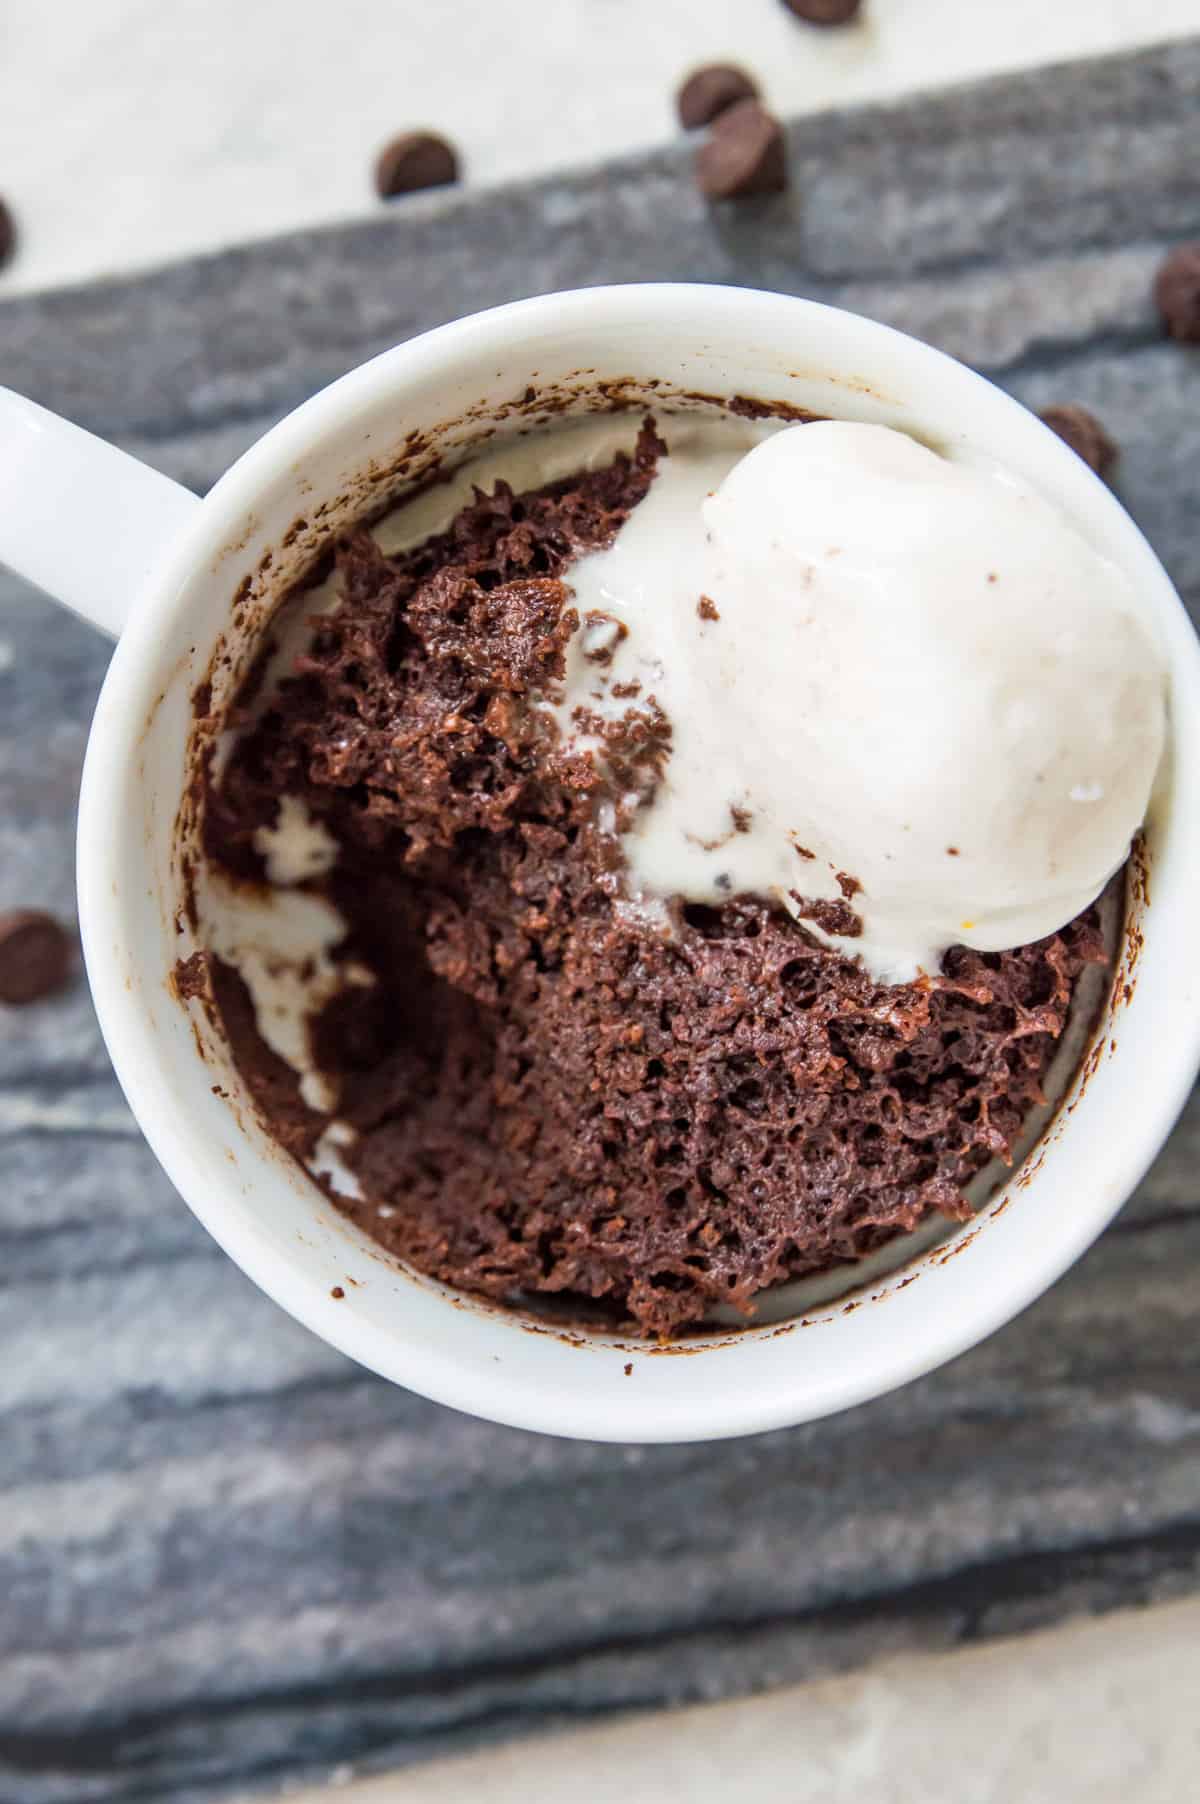 A chocolate mug cake topped with vanilla ice cream.